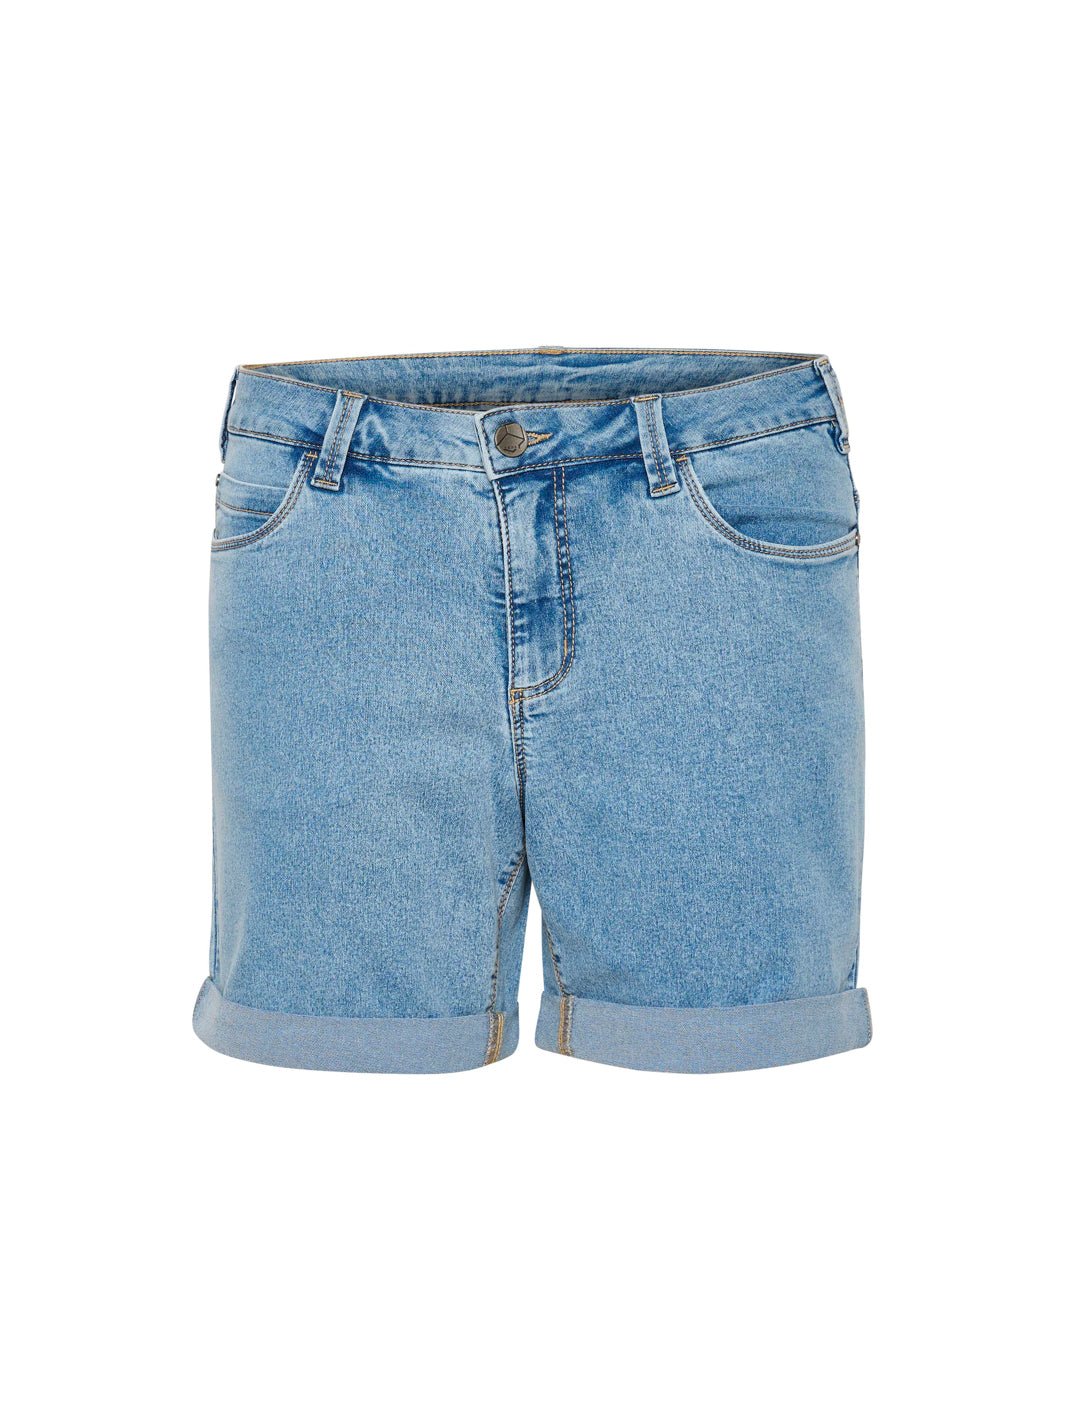 Kaffe KAvicky denim shorts light blue washed - Online-Mode